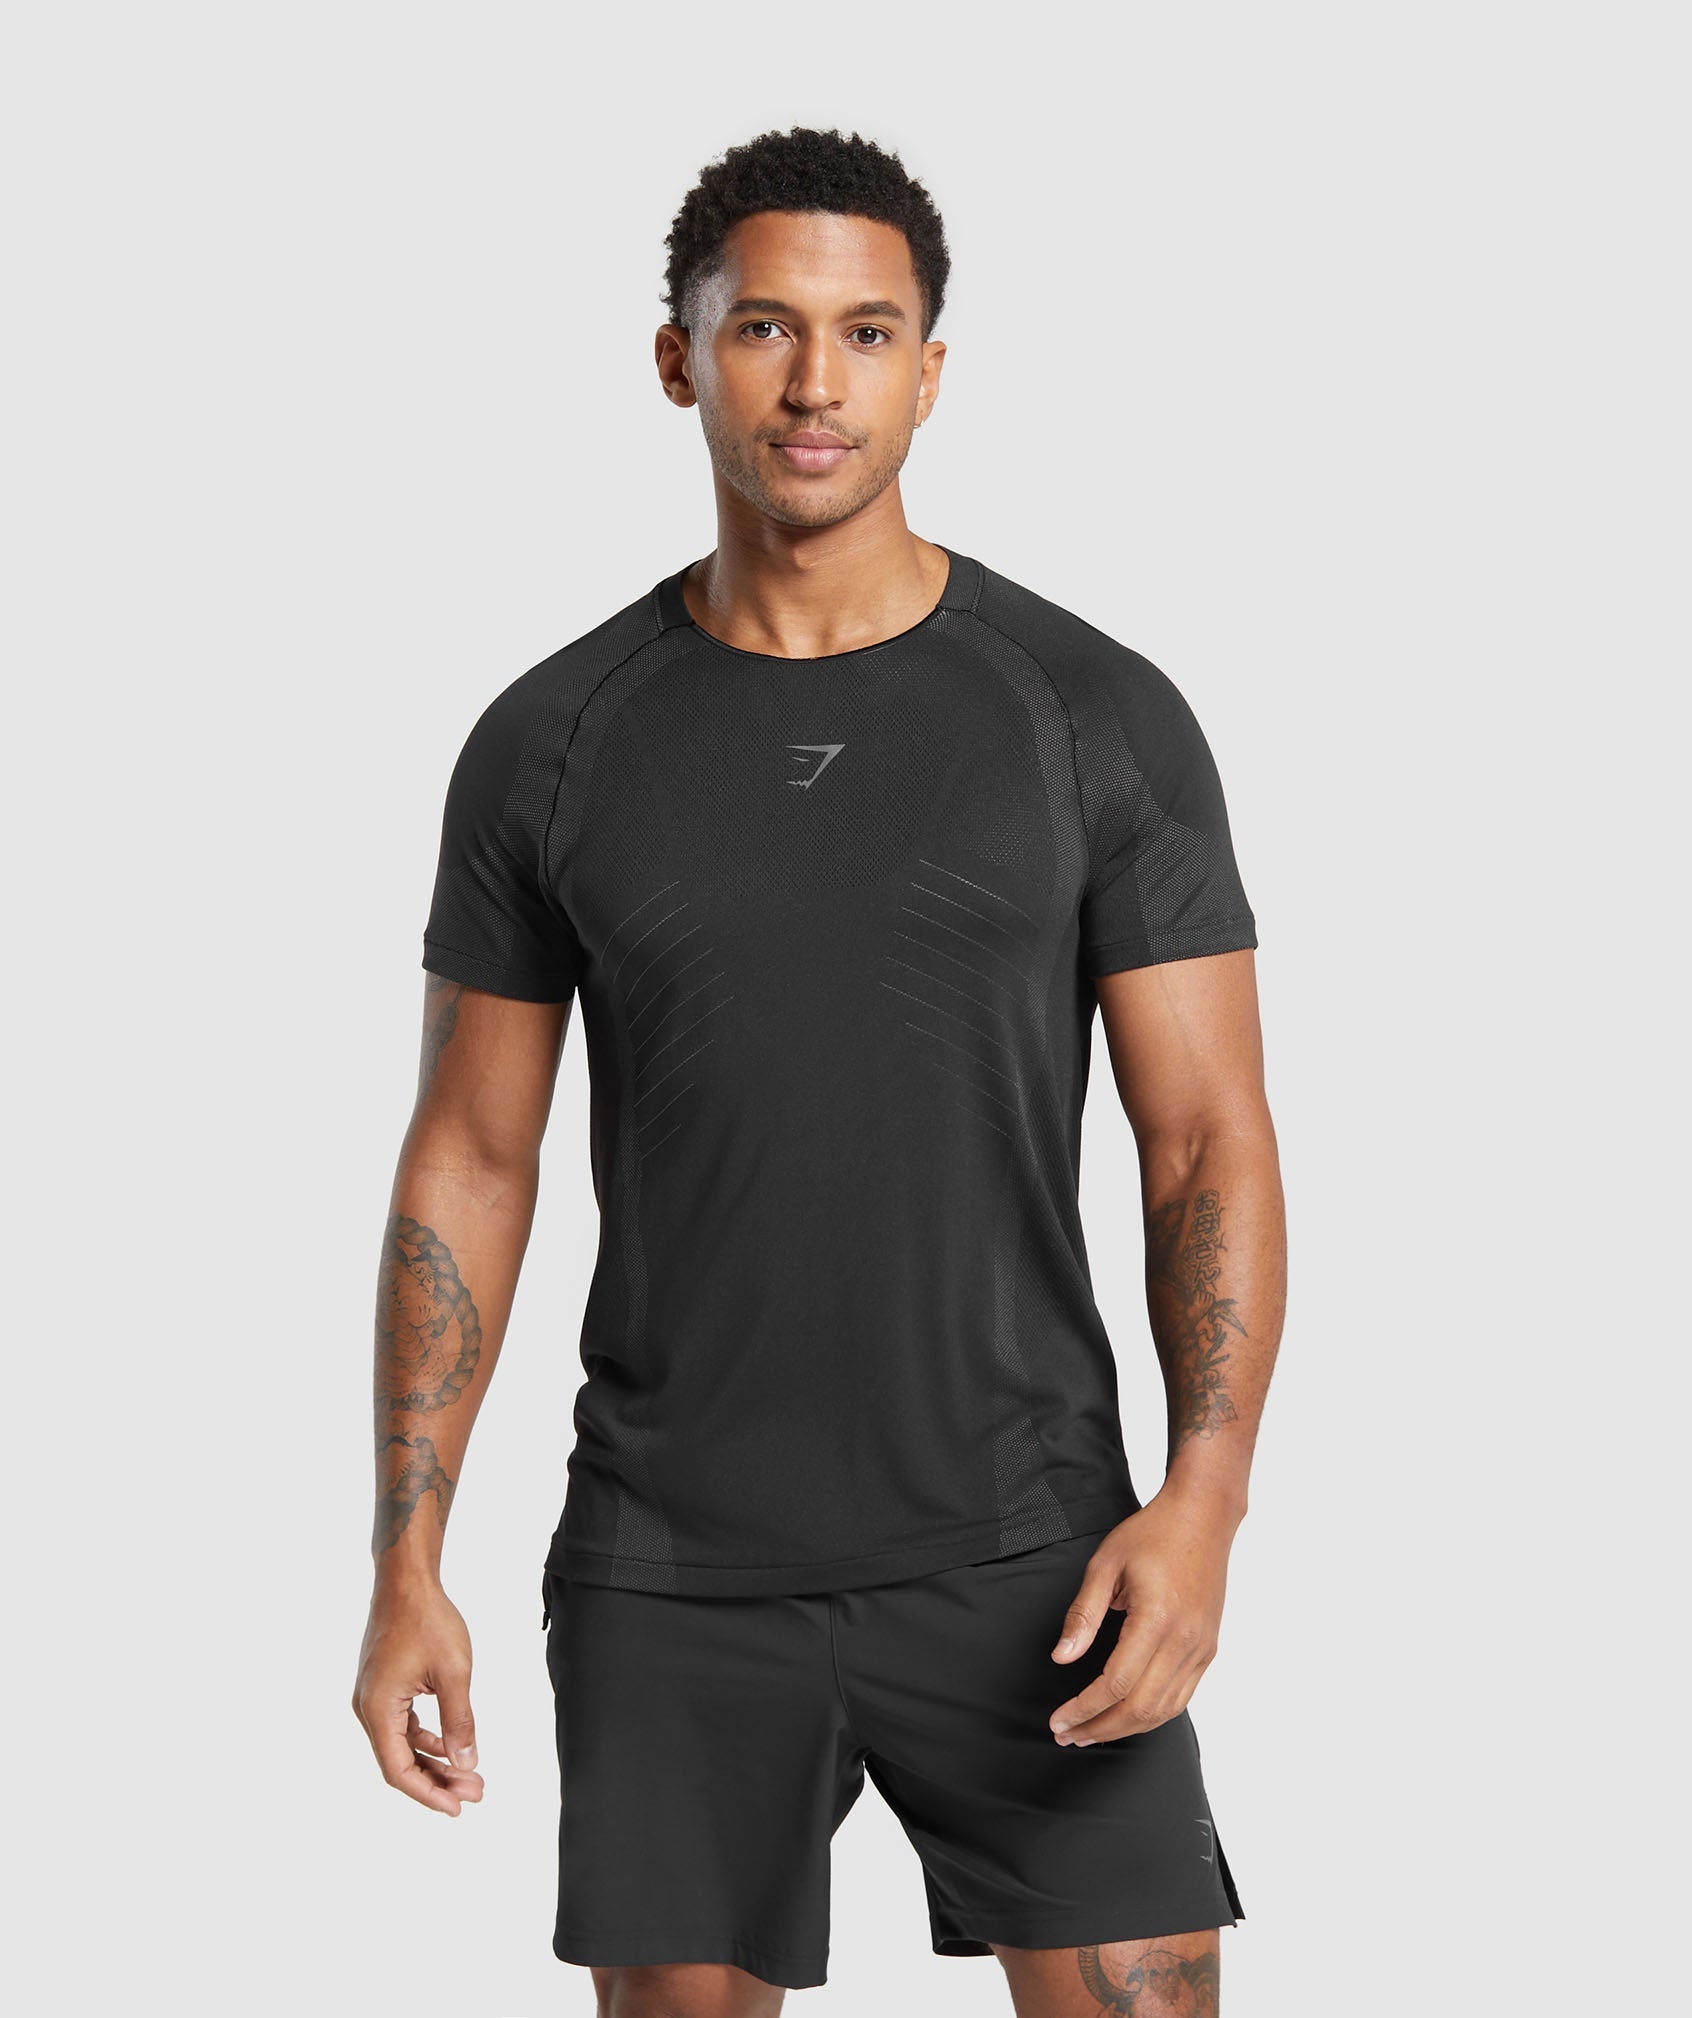 Apex Seamless T-Shirt in Black/Dark Grey - view 1